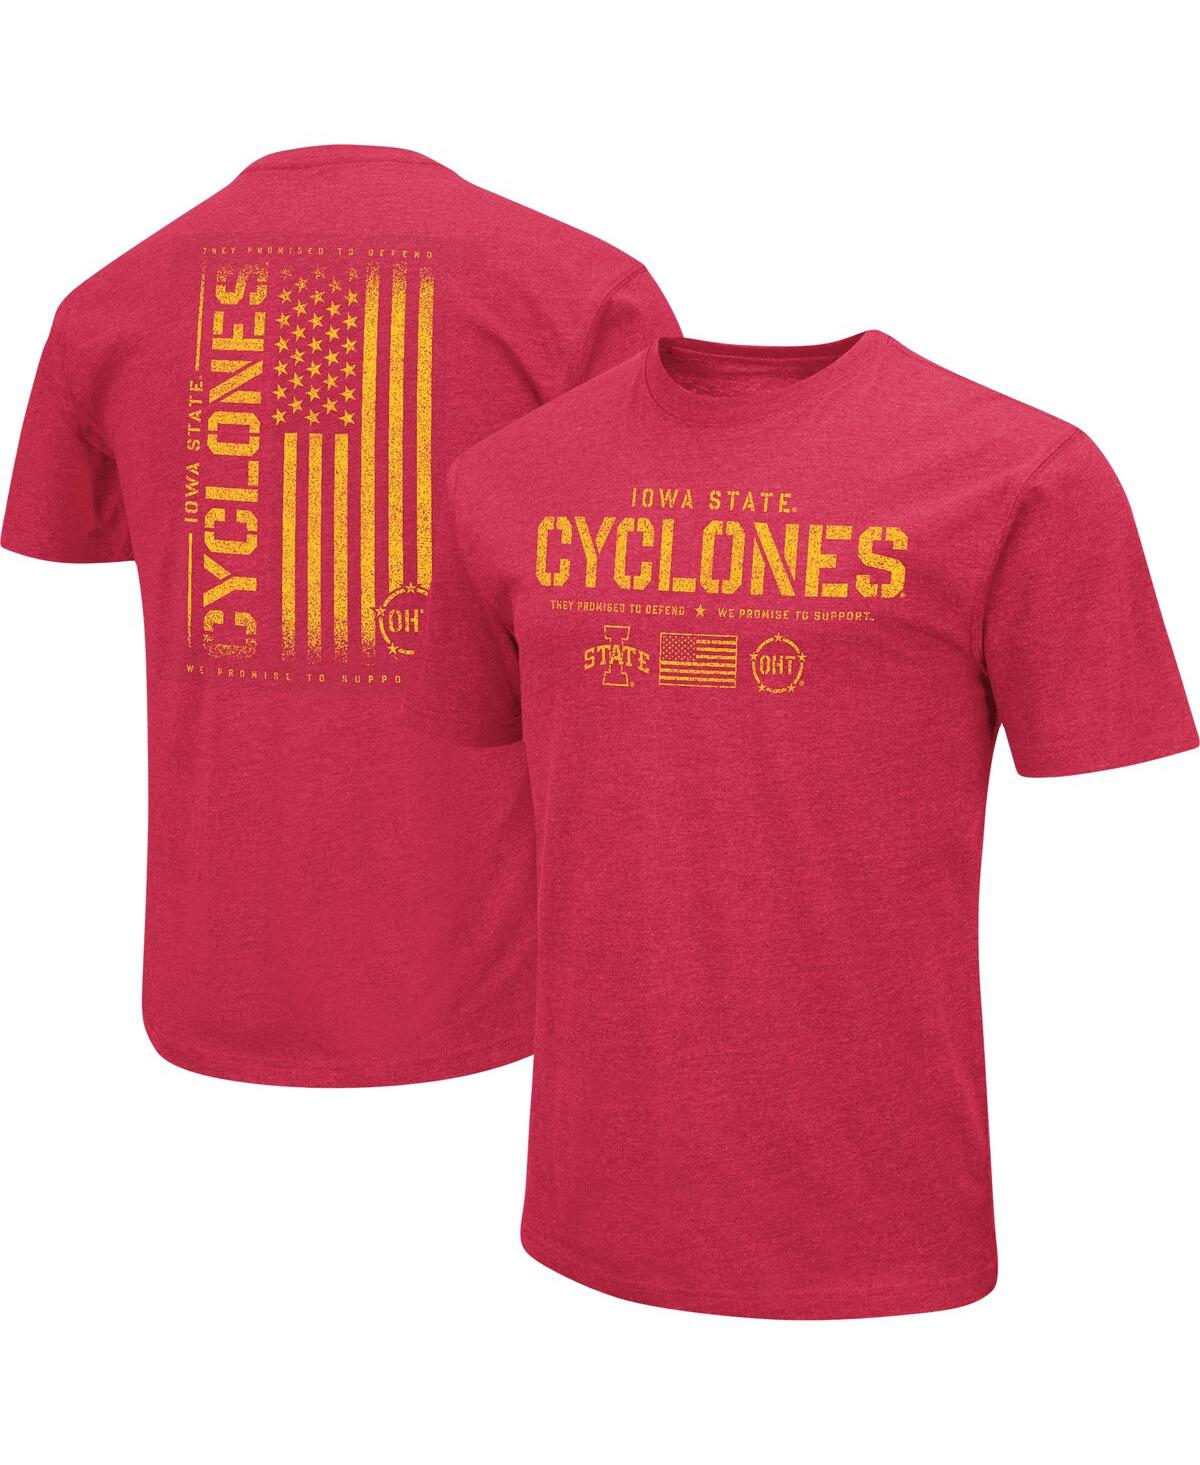 Men's Colosseum Cardinal Iowa State Cyclones Oht Military-Inspired Appreciation Flag 2.0 T-shirt - Cardinal